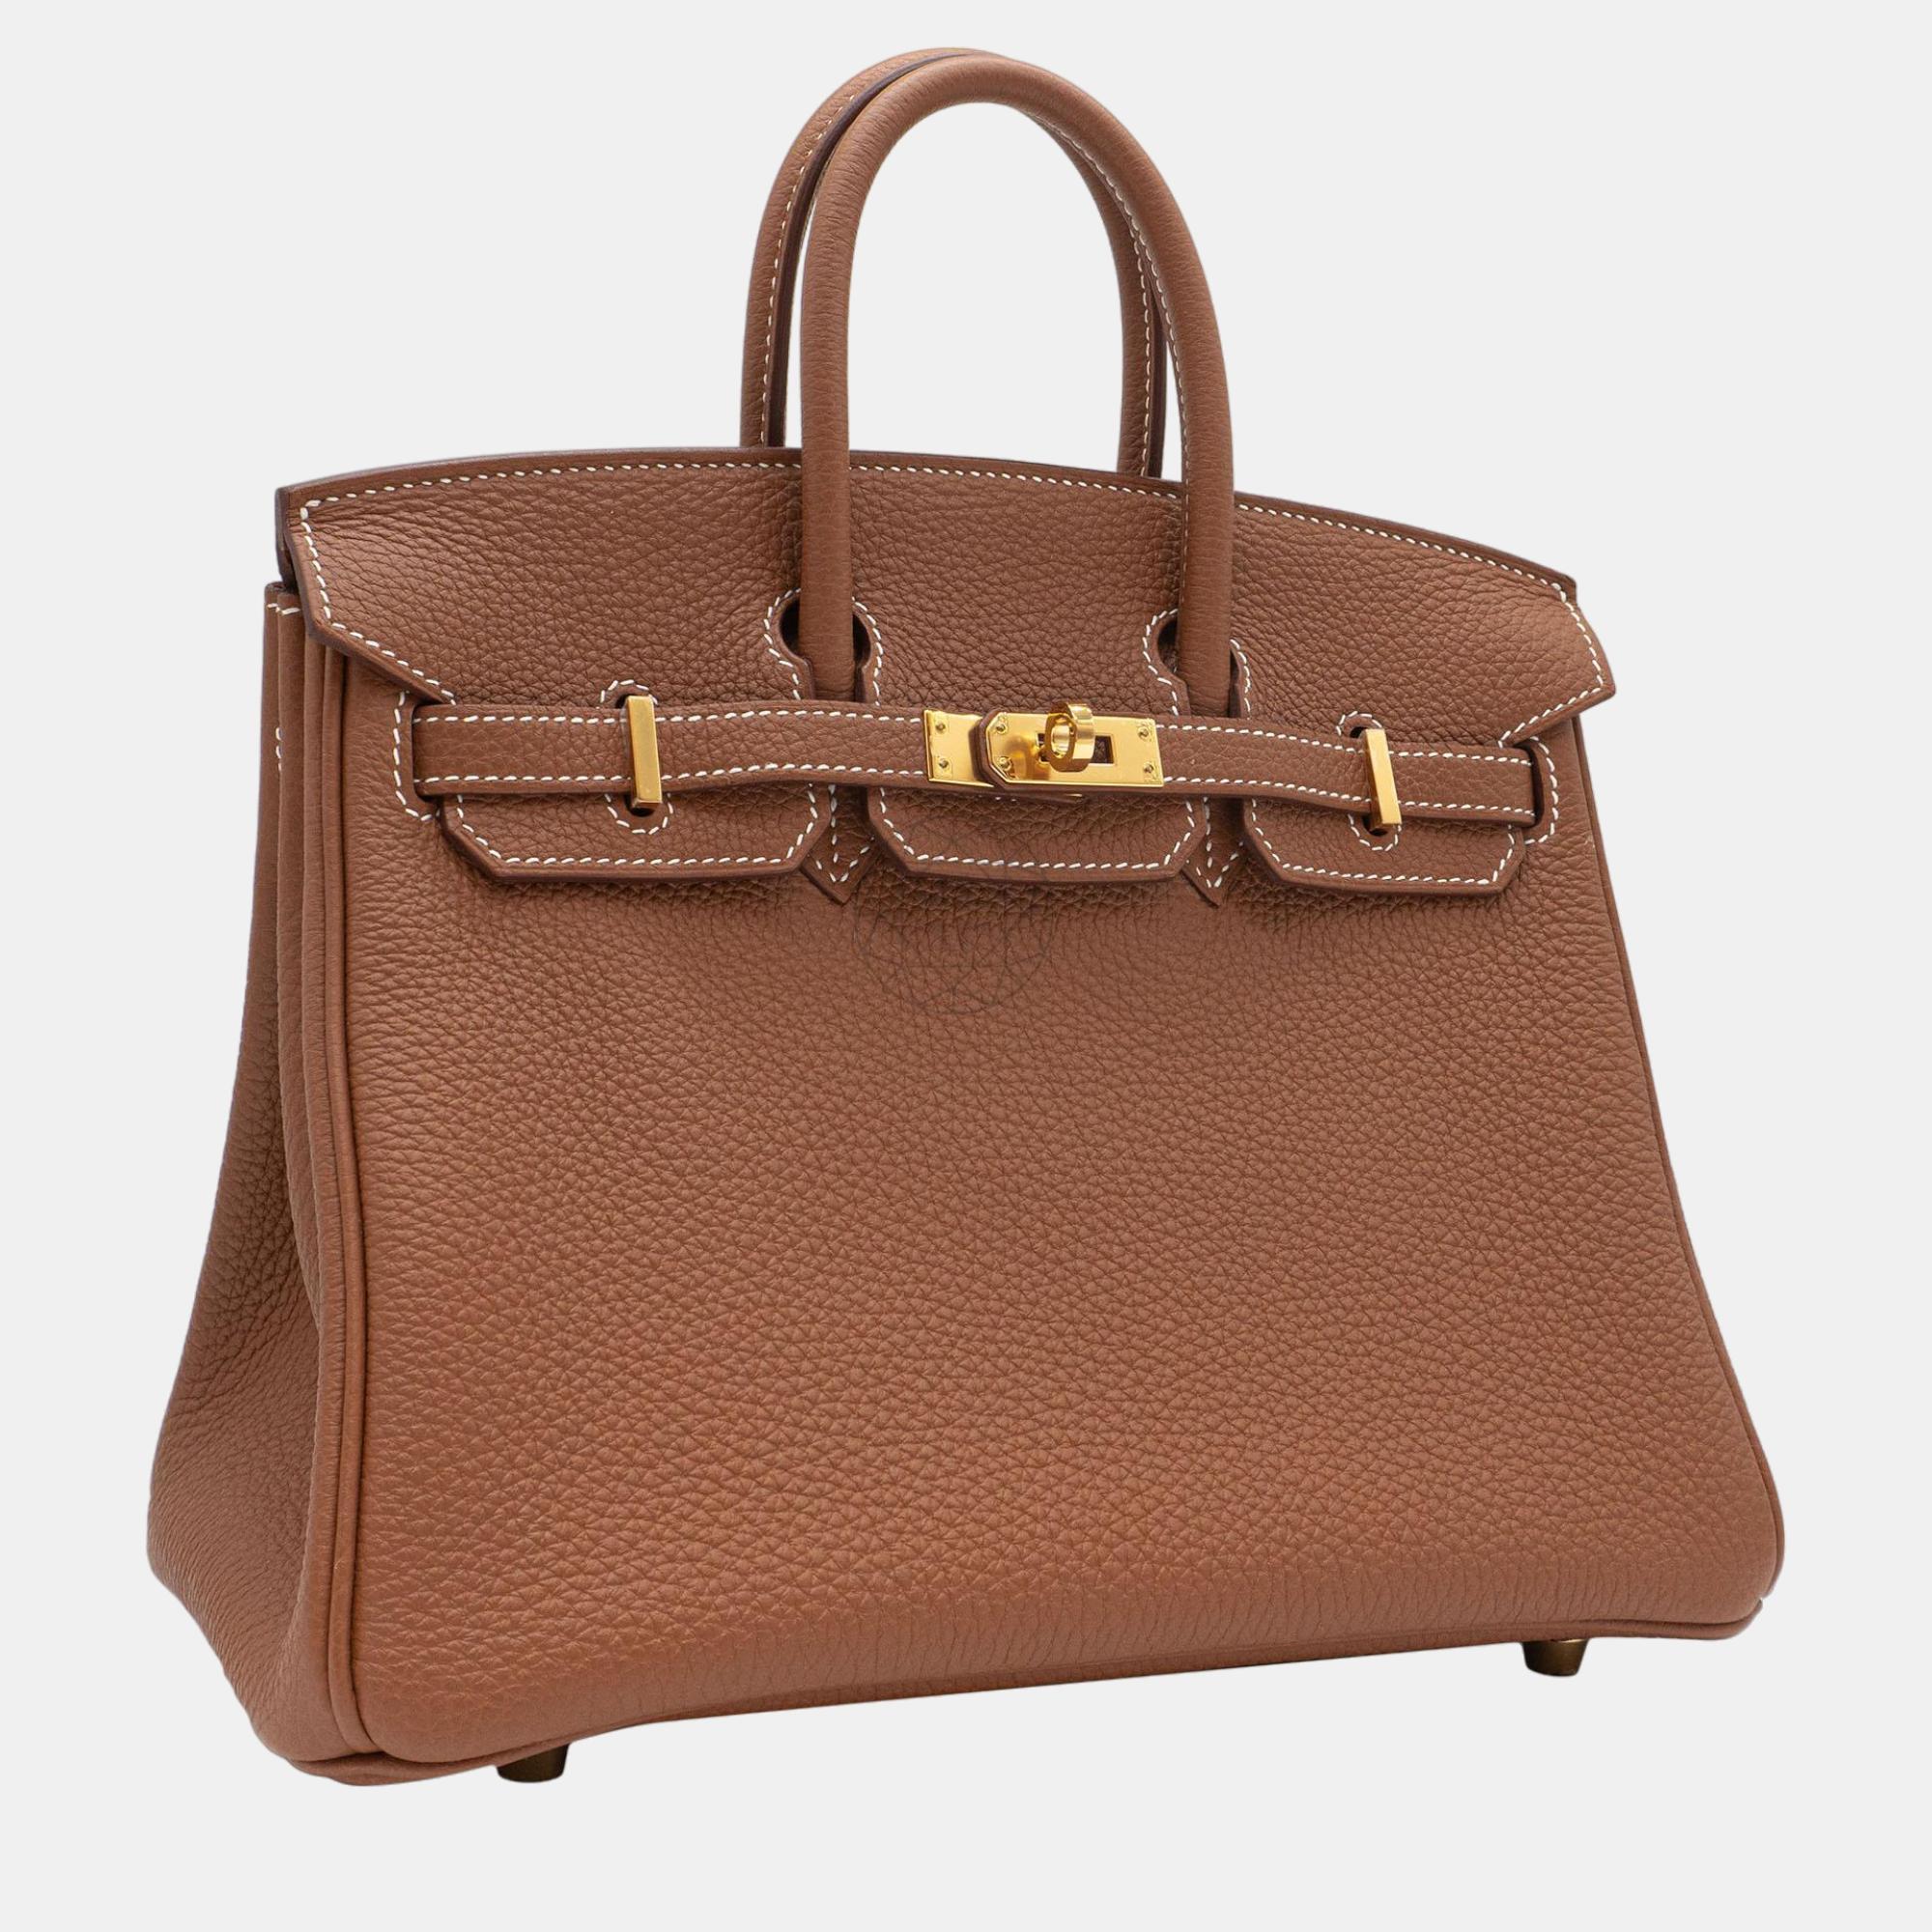 Hermès Birkin 25 In Gold Togo Leather With GHW Bag